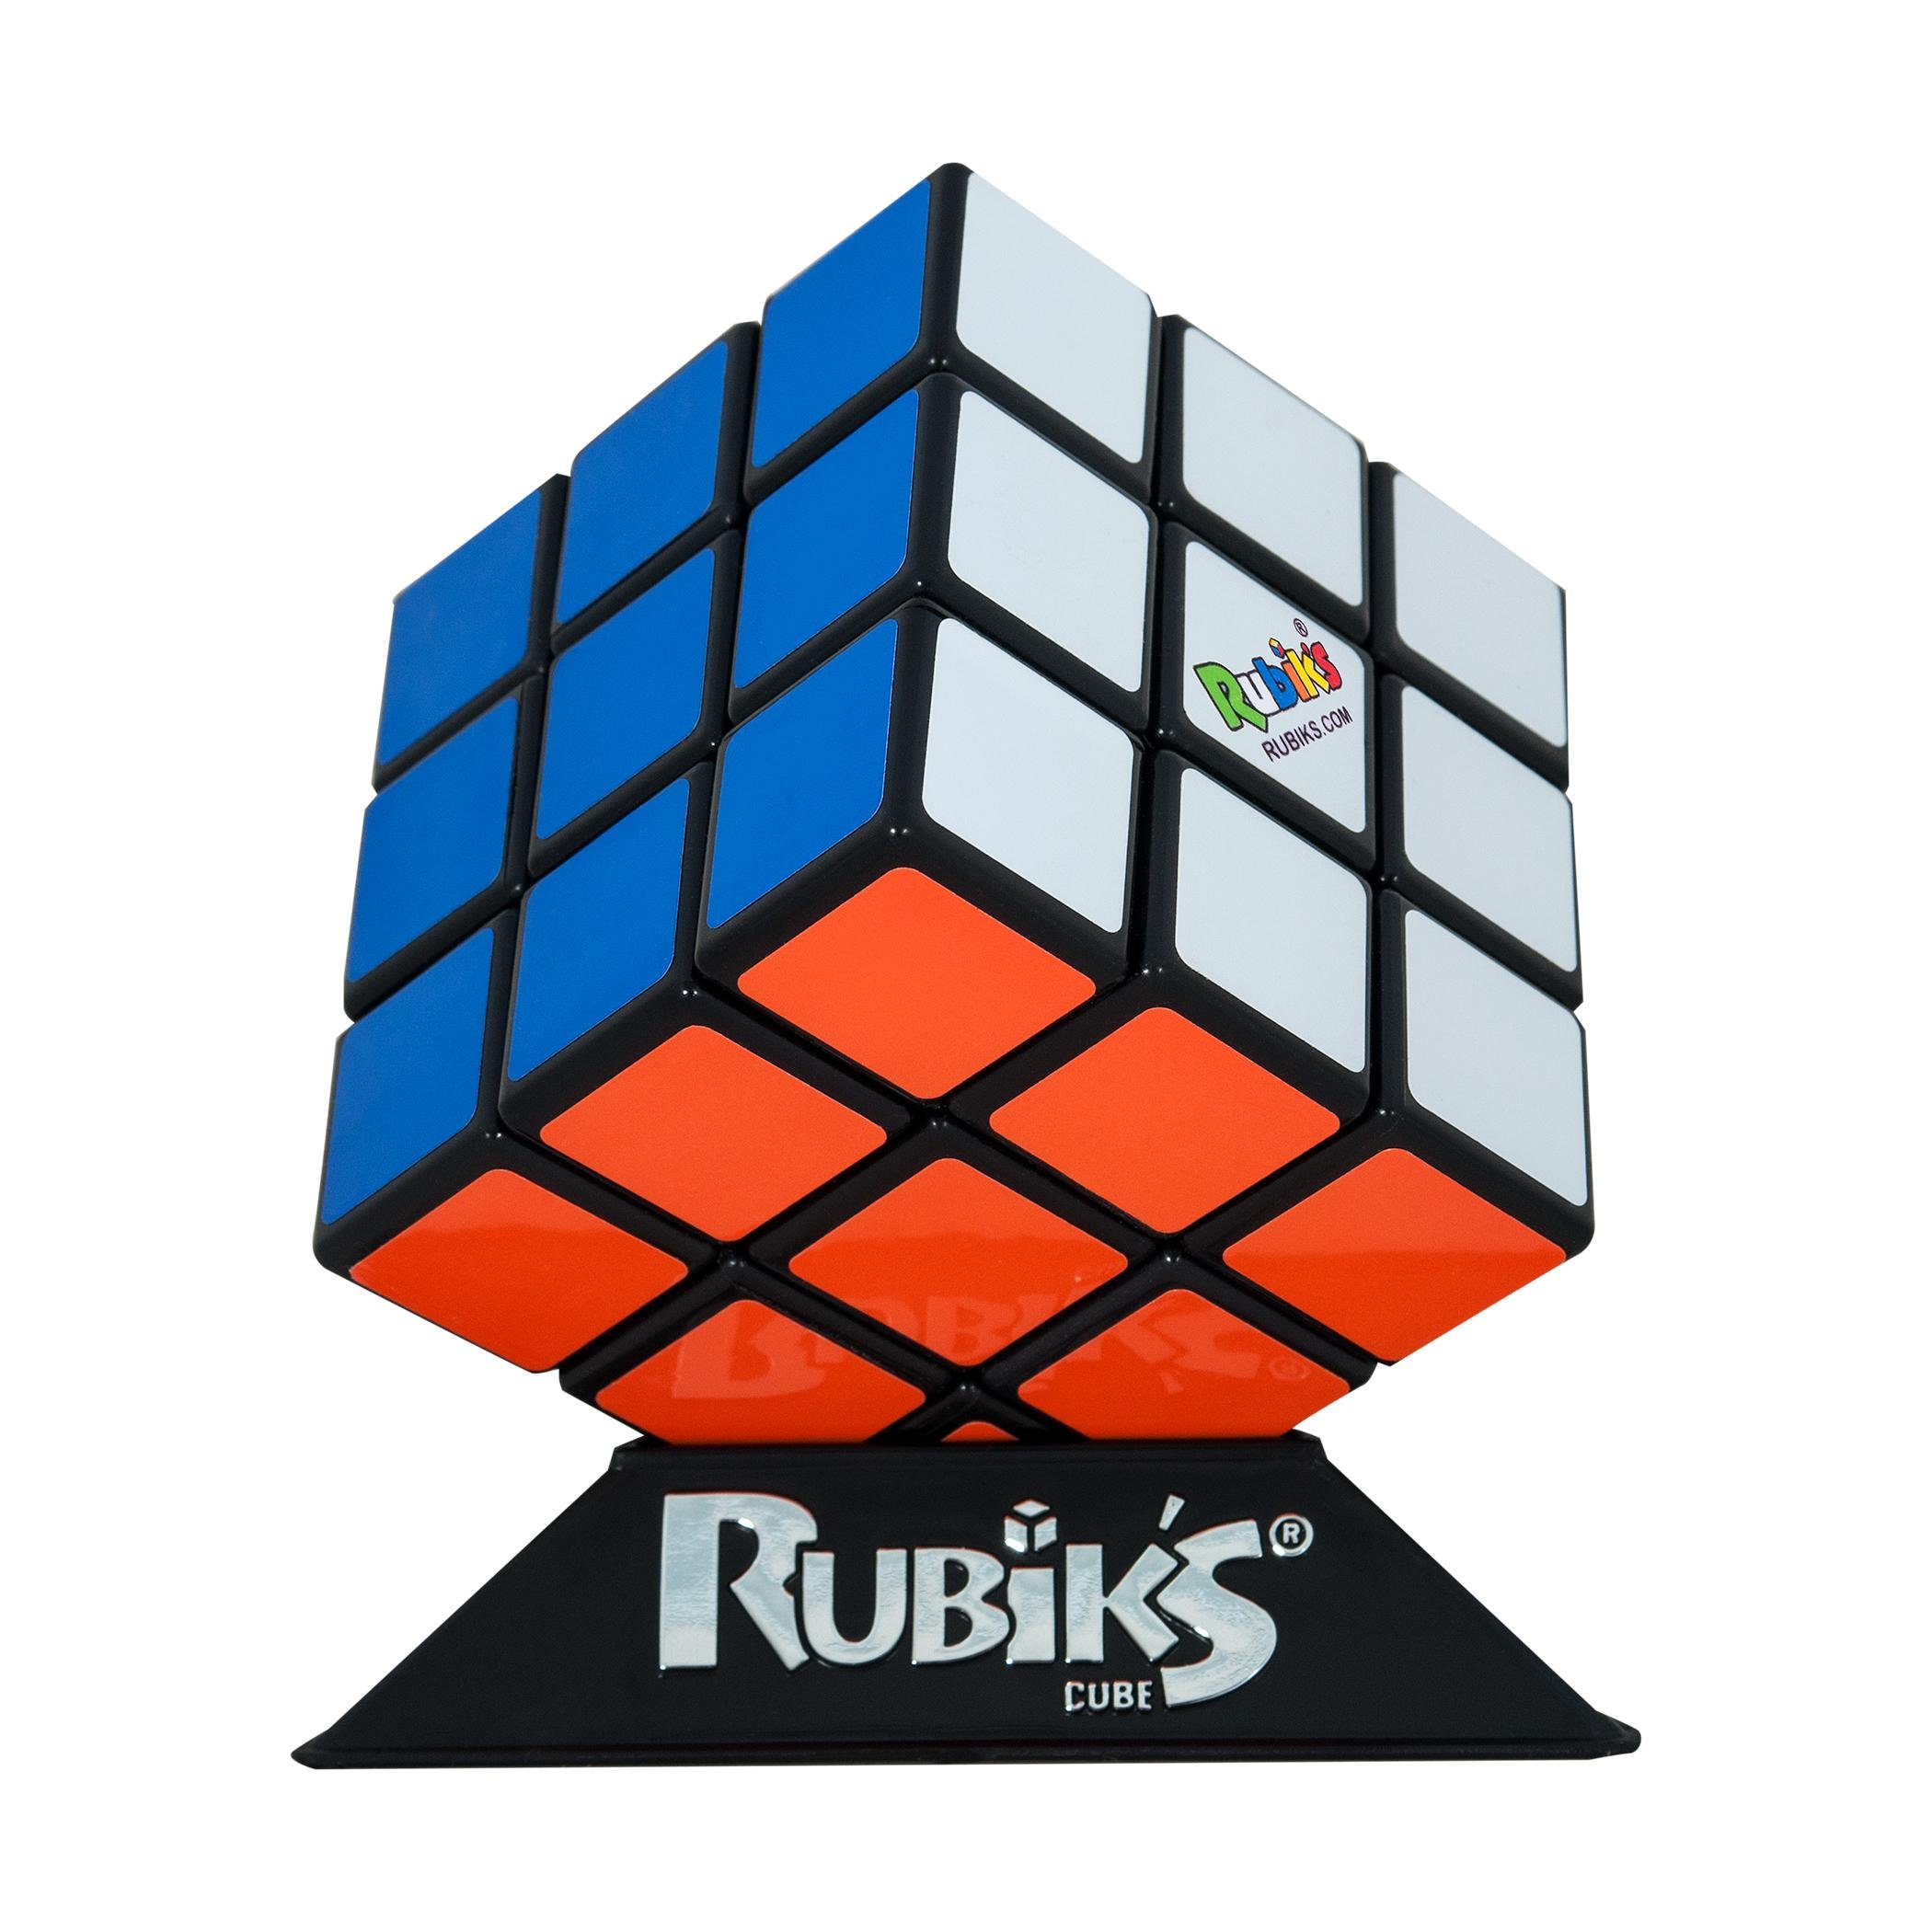  Rubik's Cube Toy